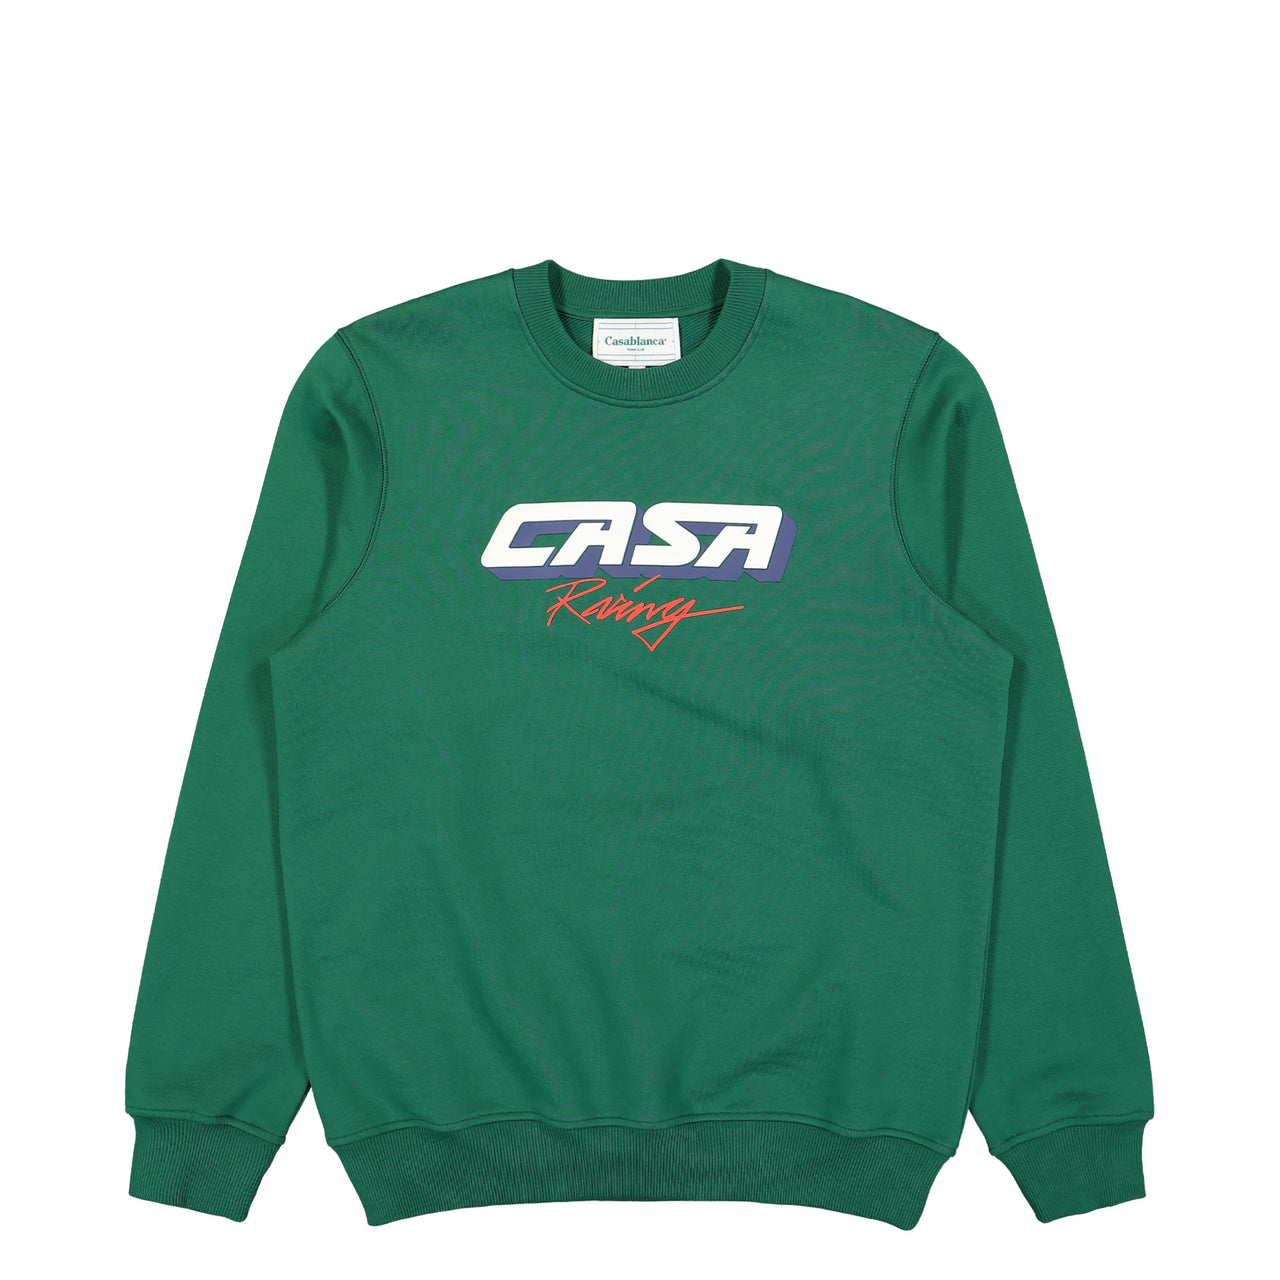 Casa Racing 3D Printed Sweatshirt